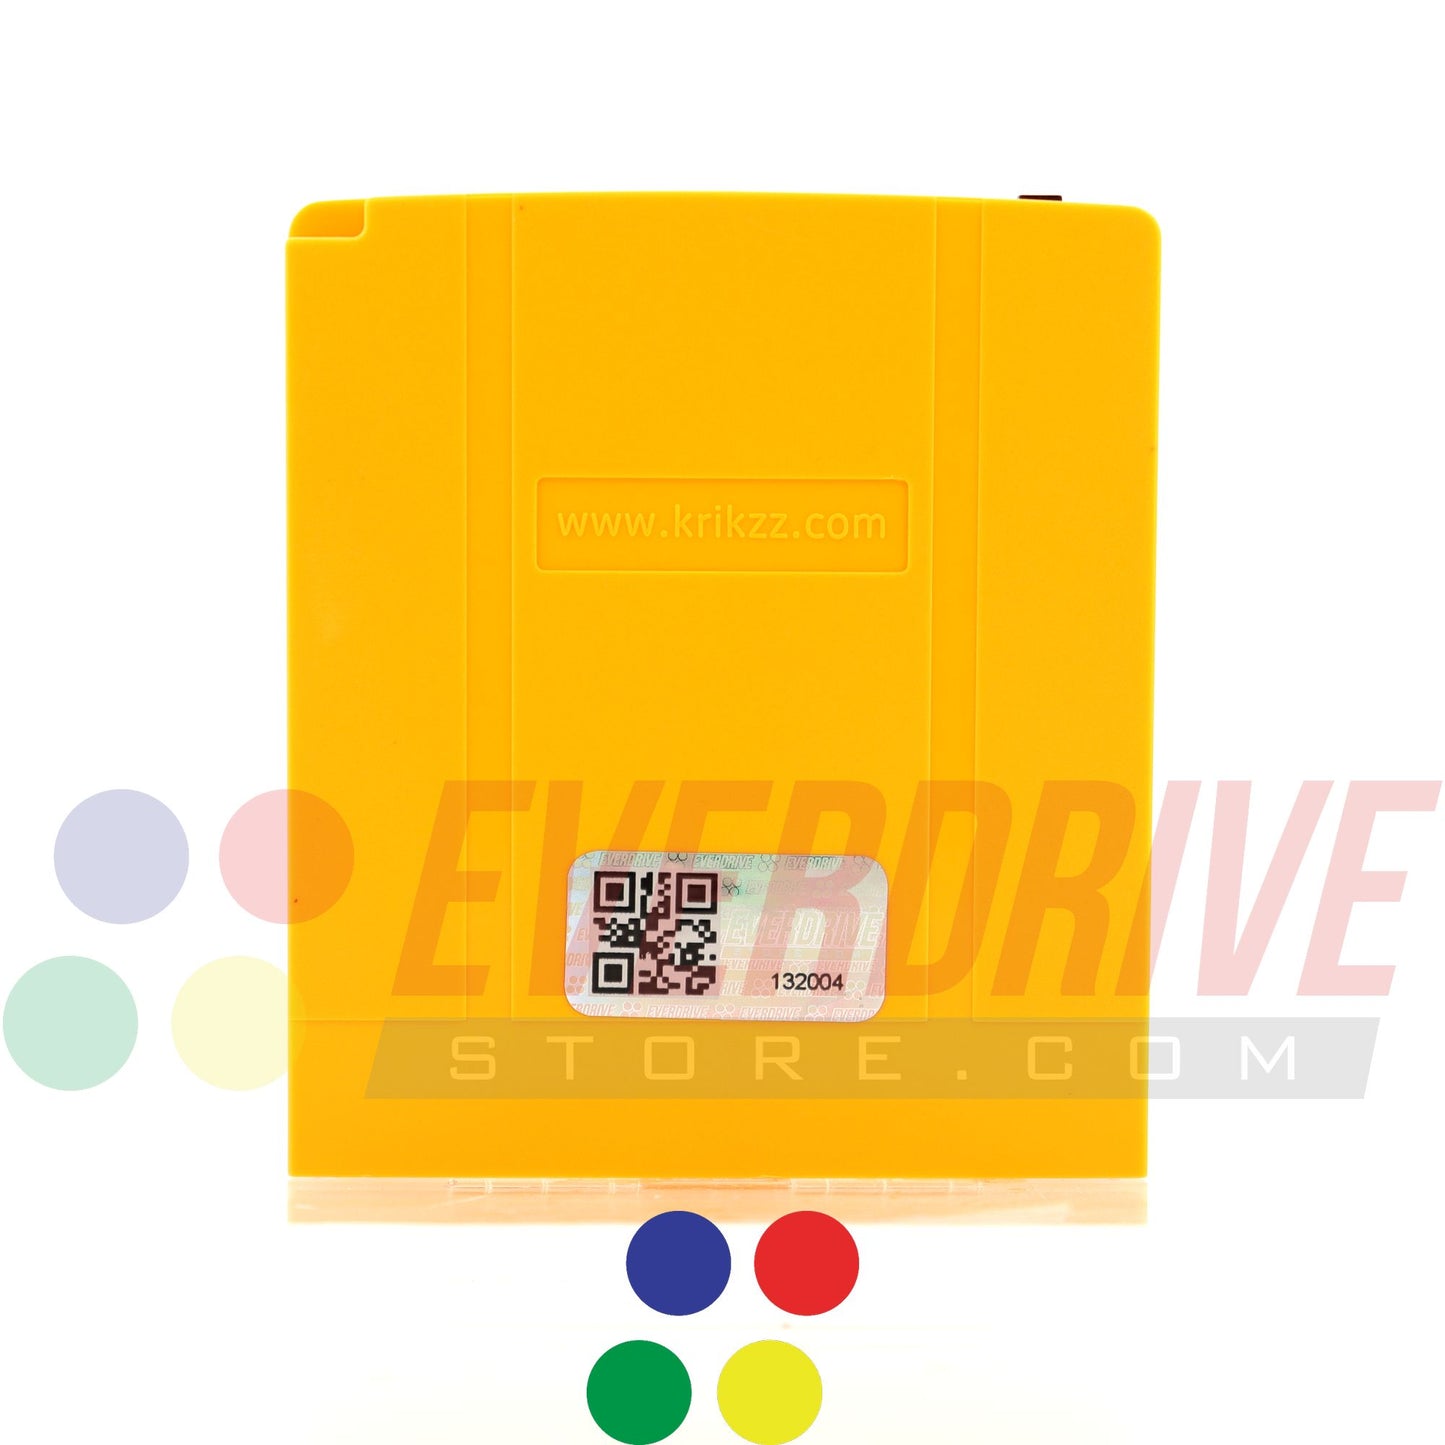 Everdrive GB X7 - Yellow